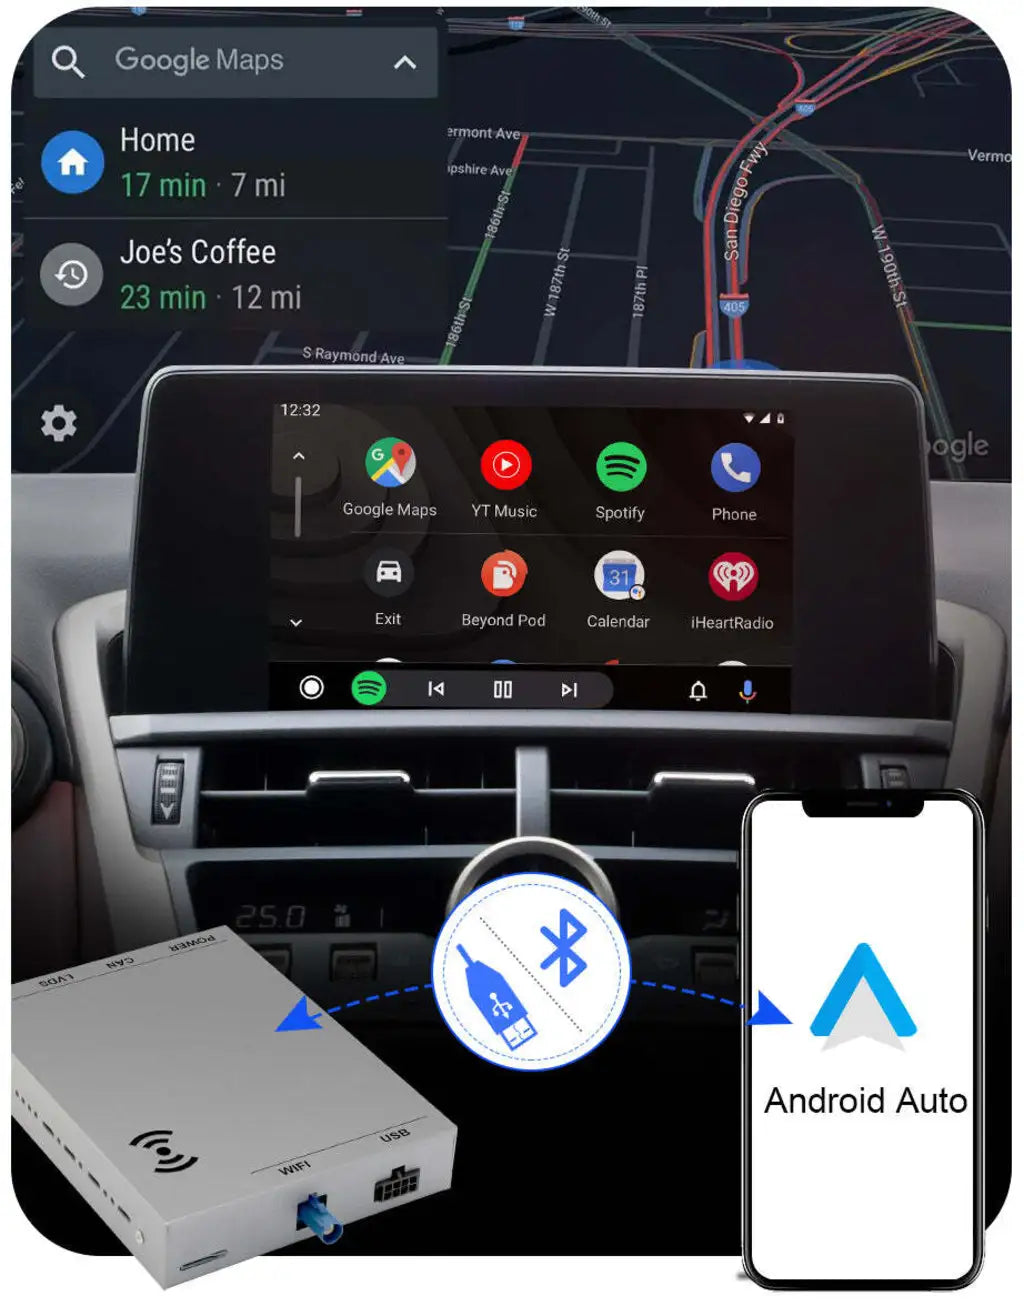 Lexus wilreless Android auto module